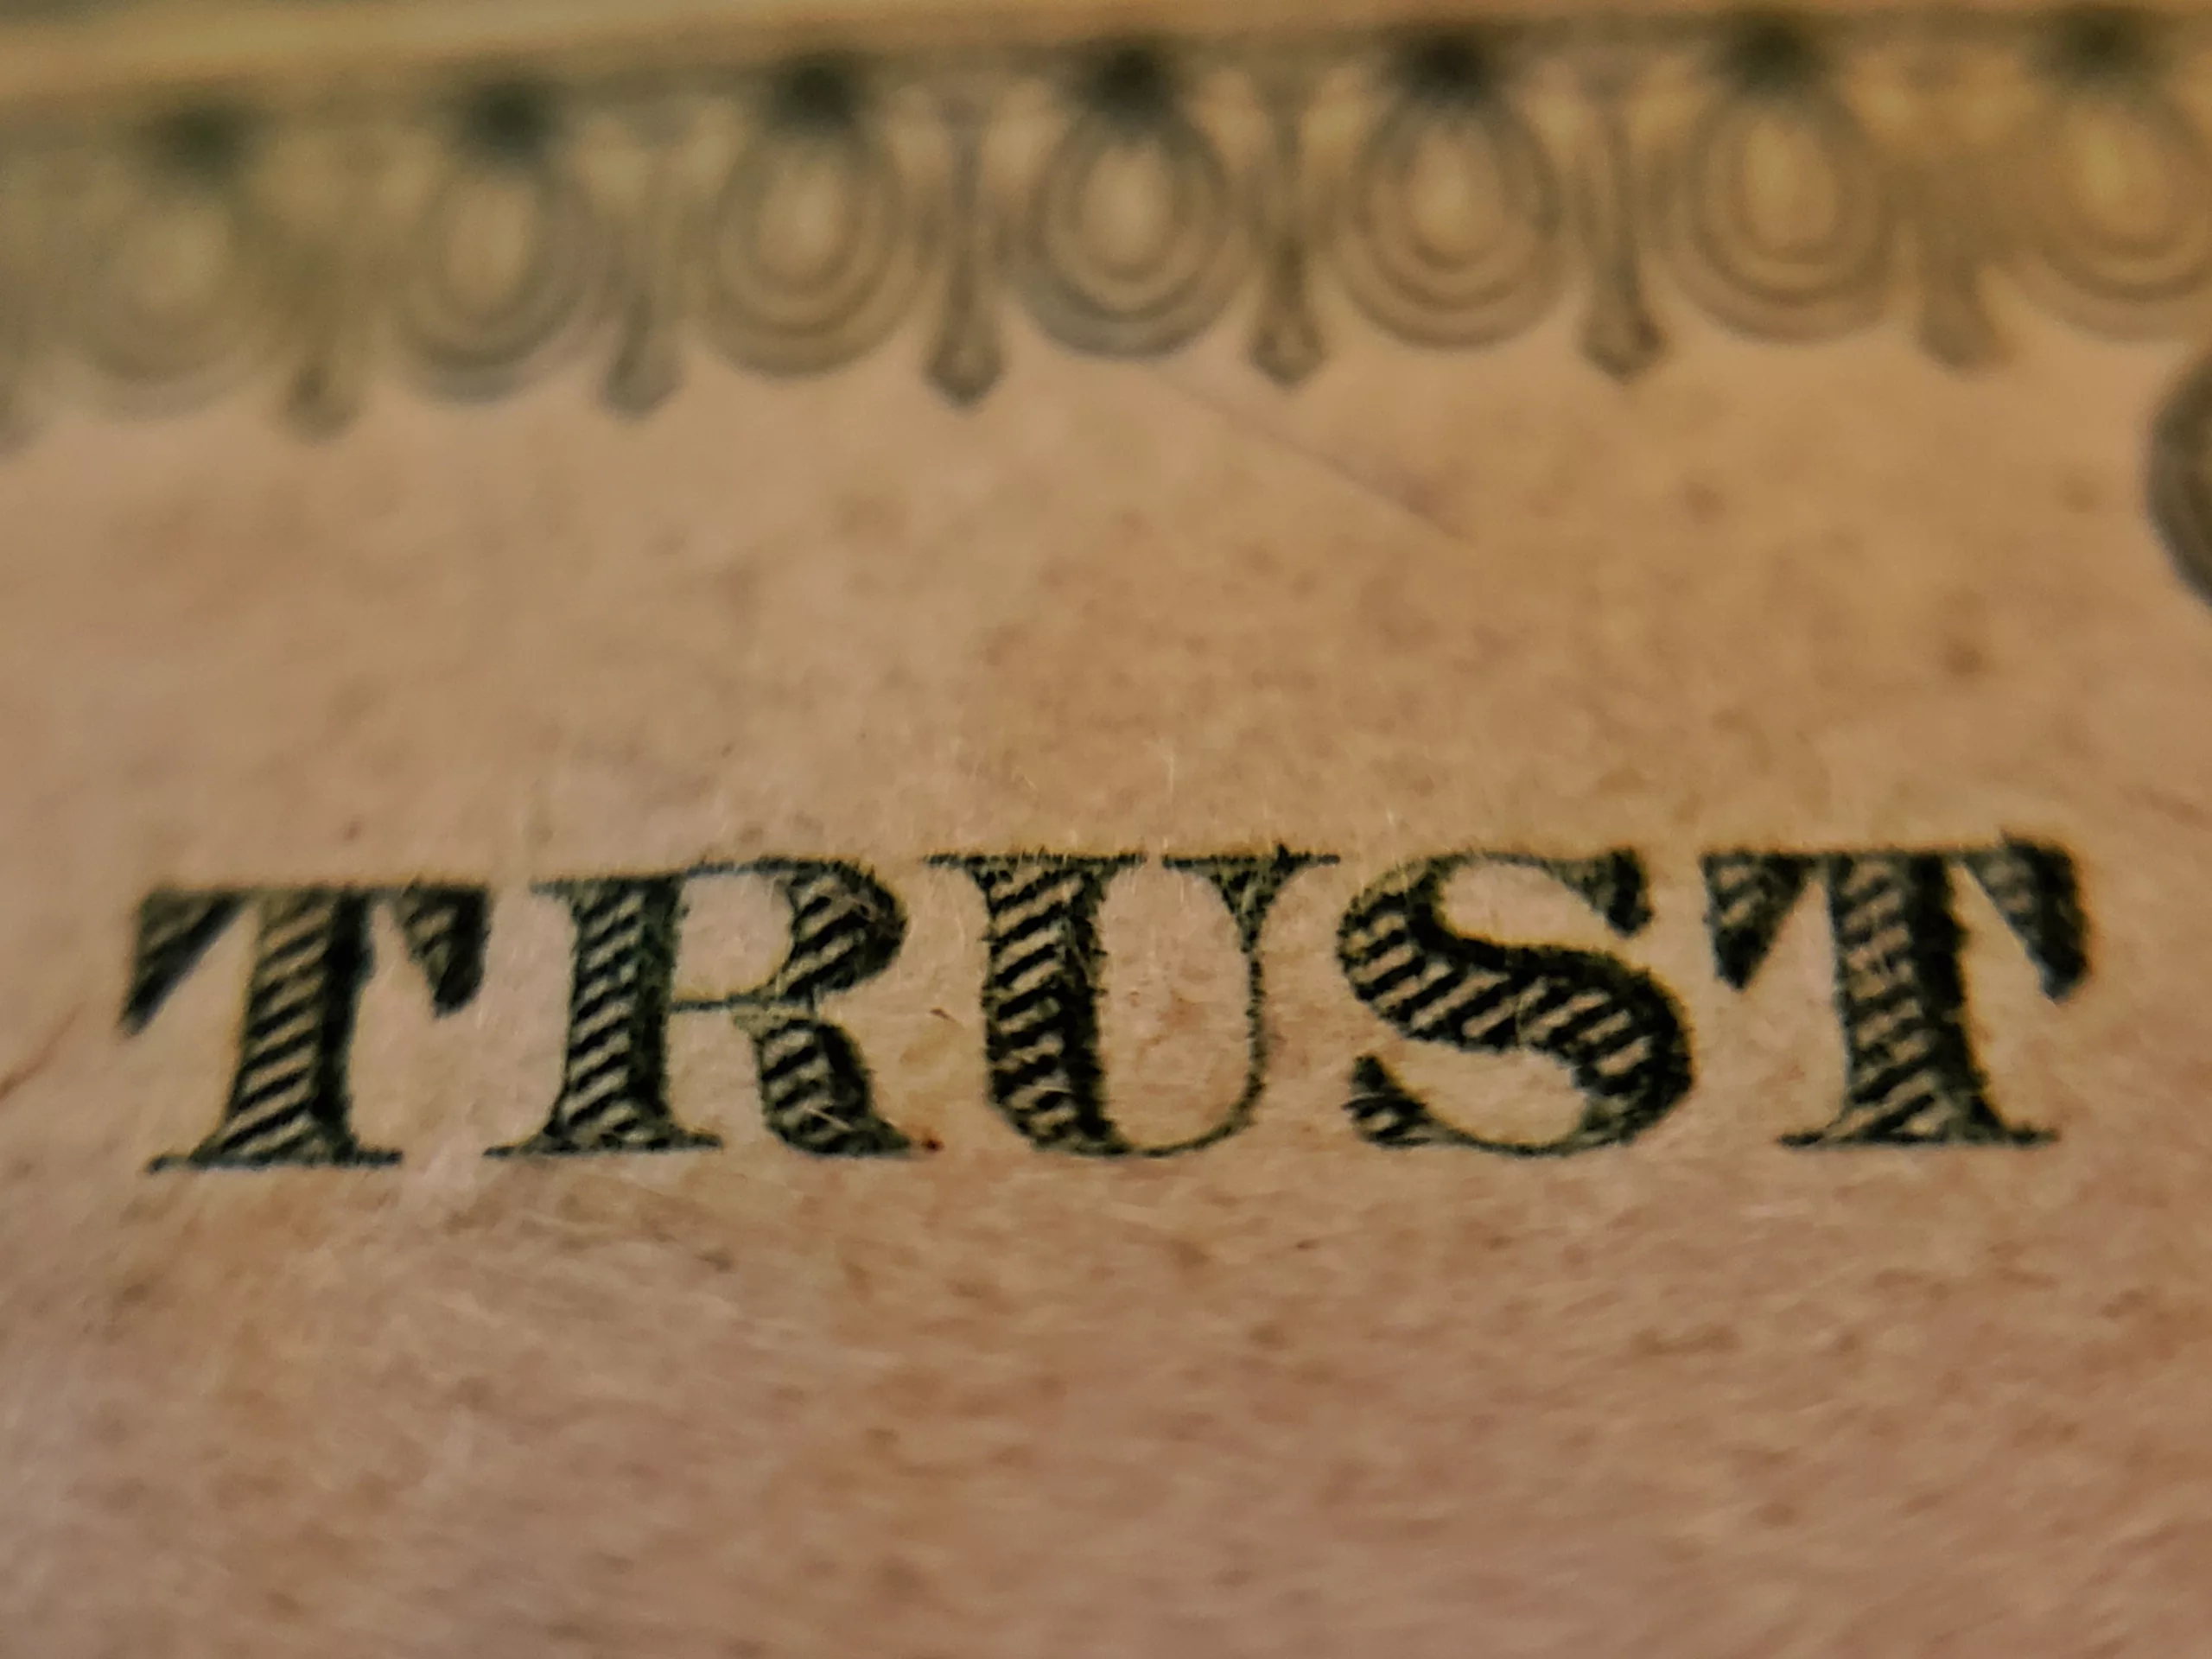 ADVANTAGES OF A BUSINESS TRUST